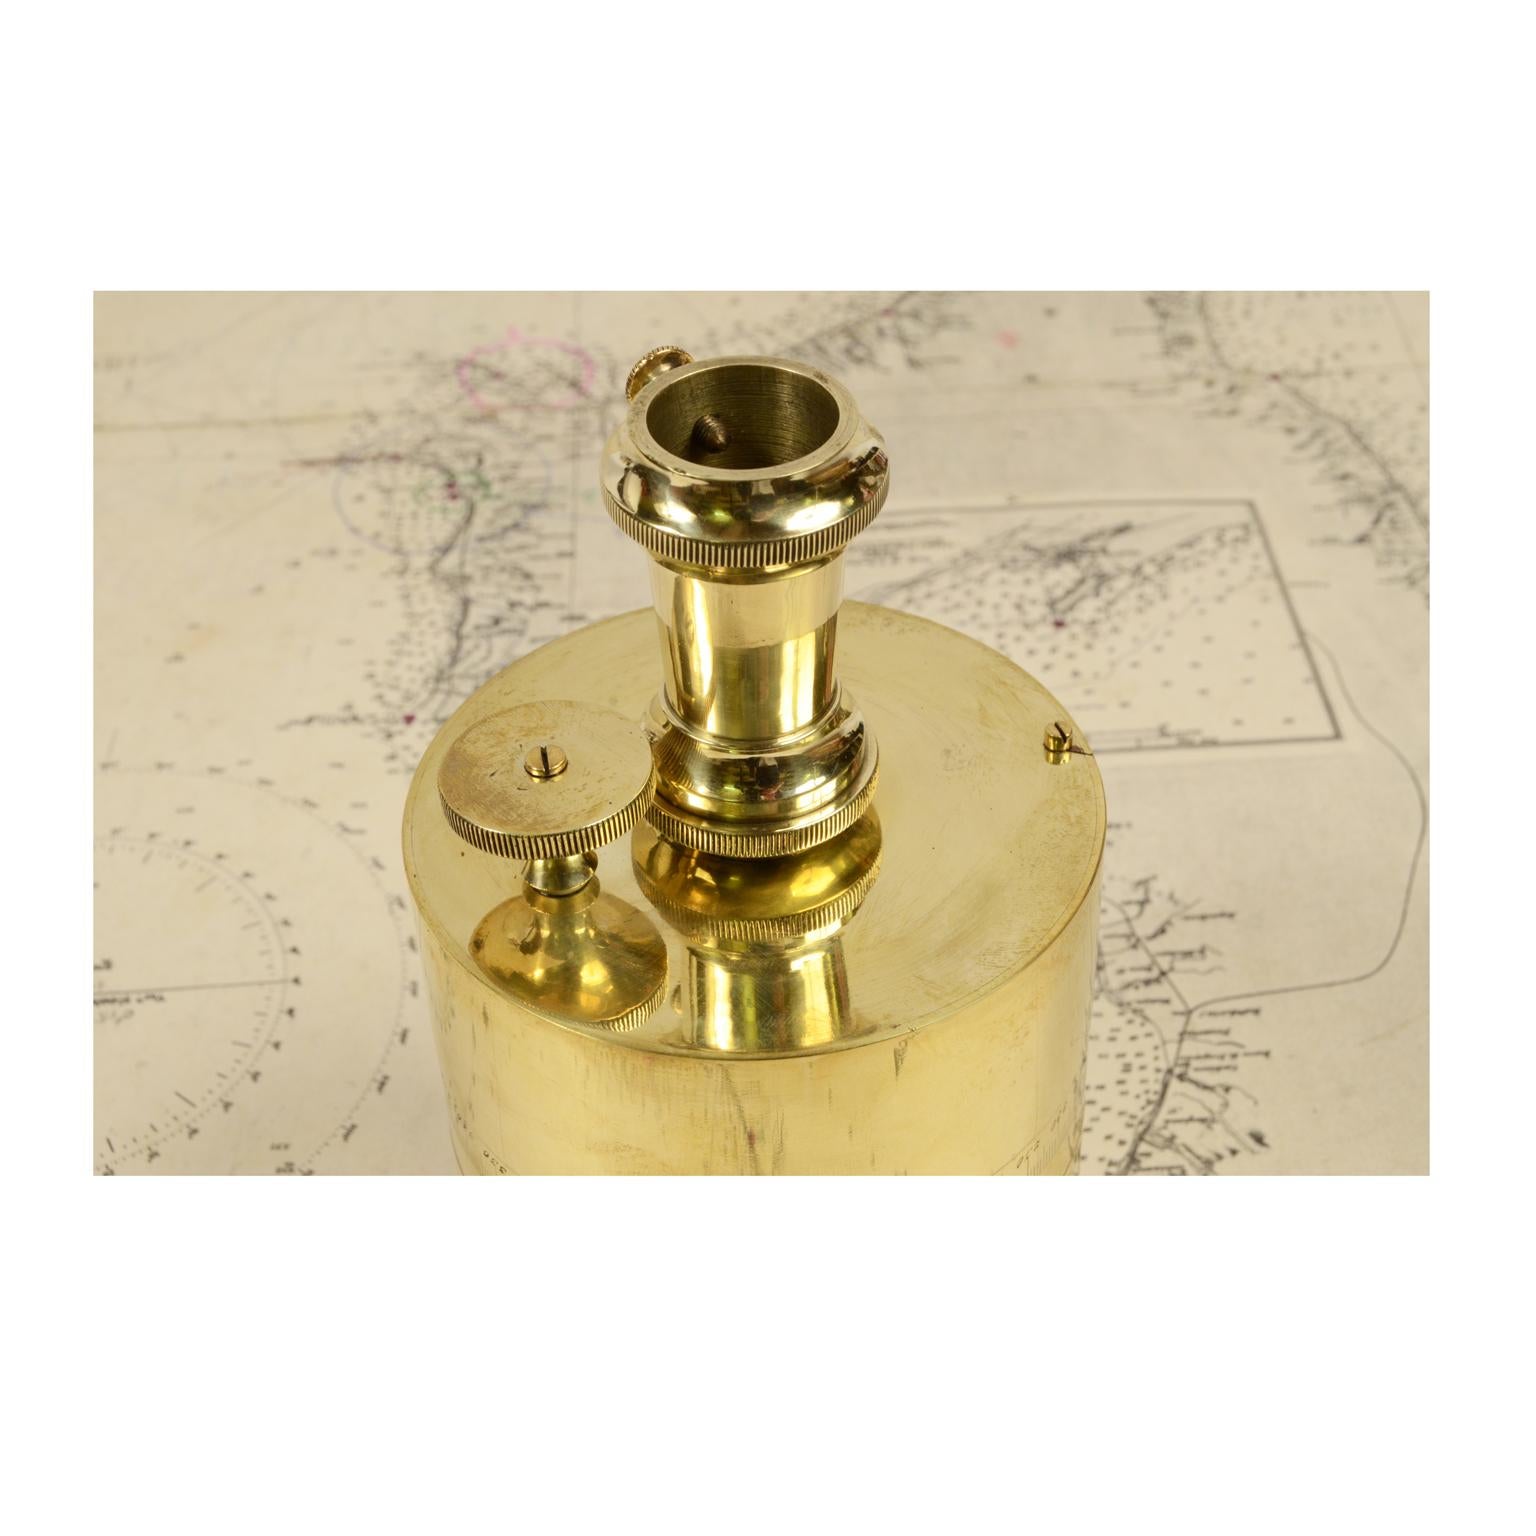 Italian Brass Land-Surveyor Instrument Made in 1860 with its Original Walnut Box For Sale 6